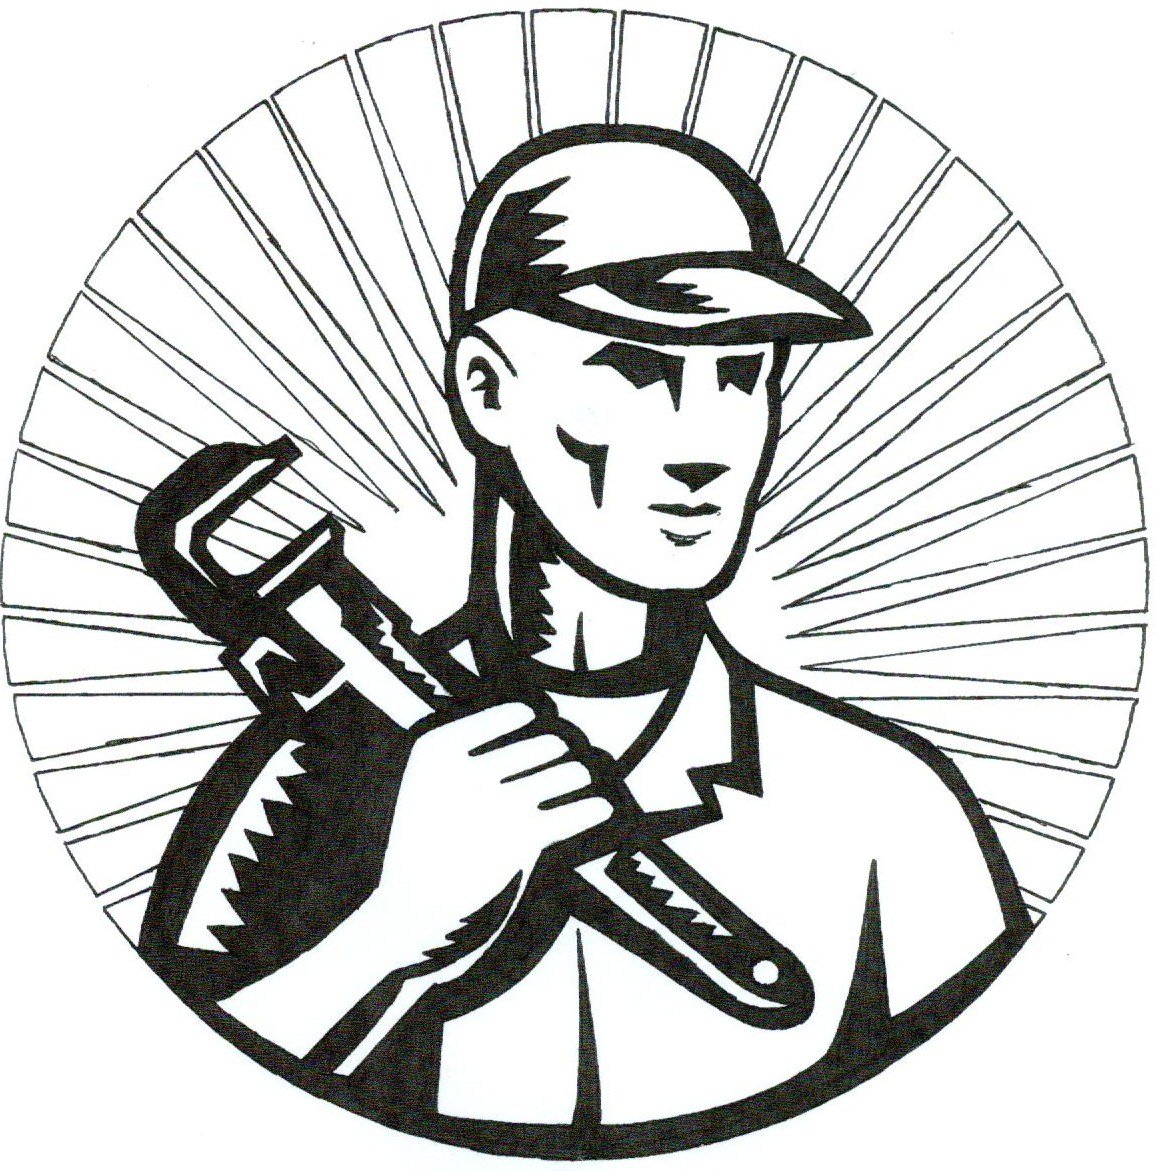 Thatcher & Son Services, Inc. Logo